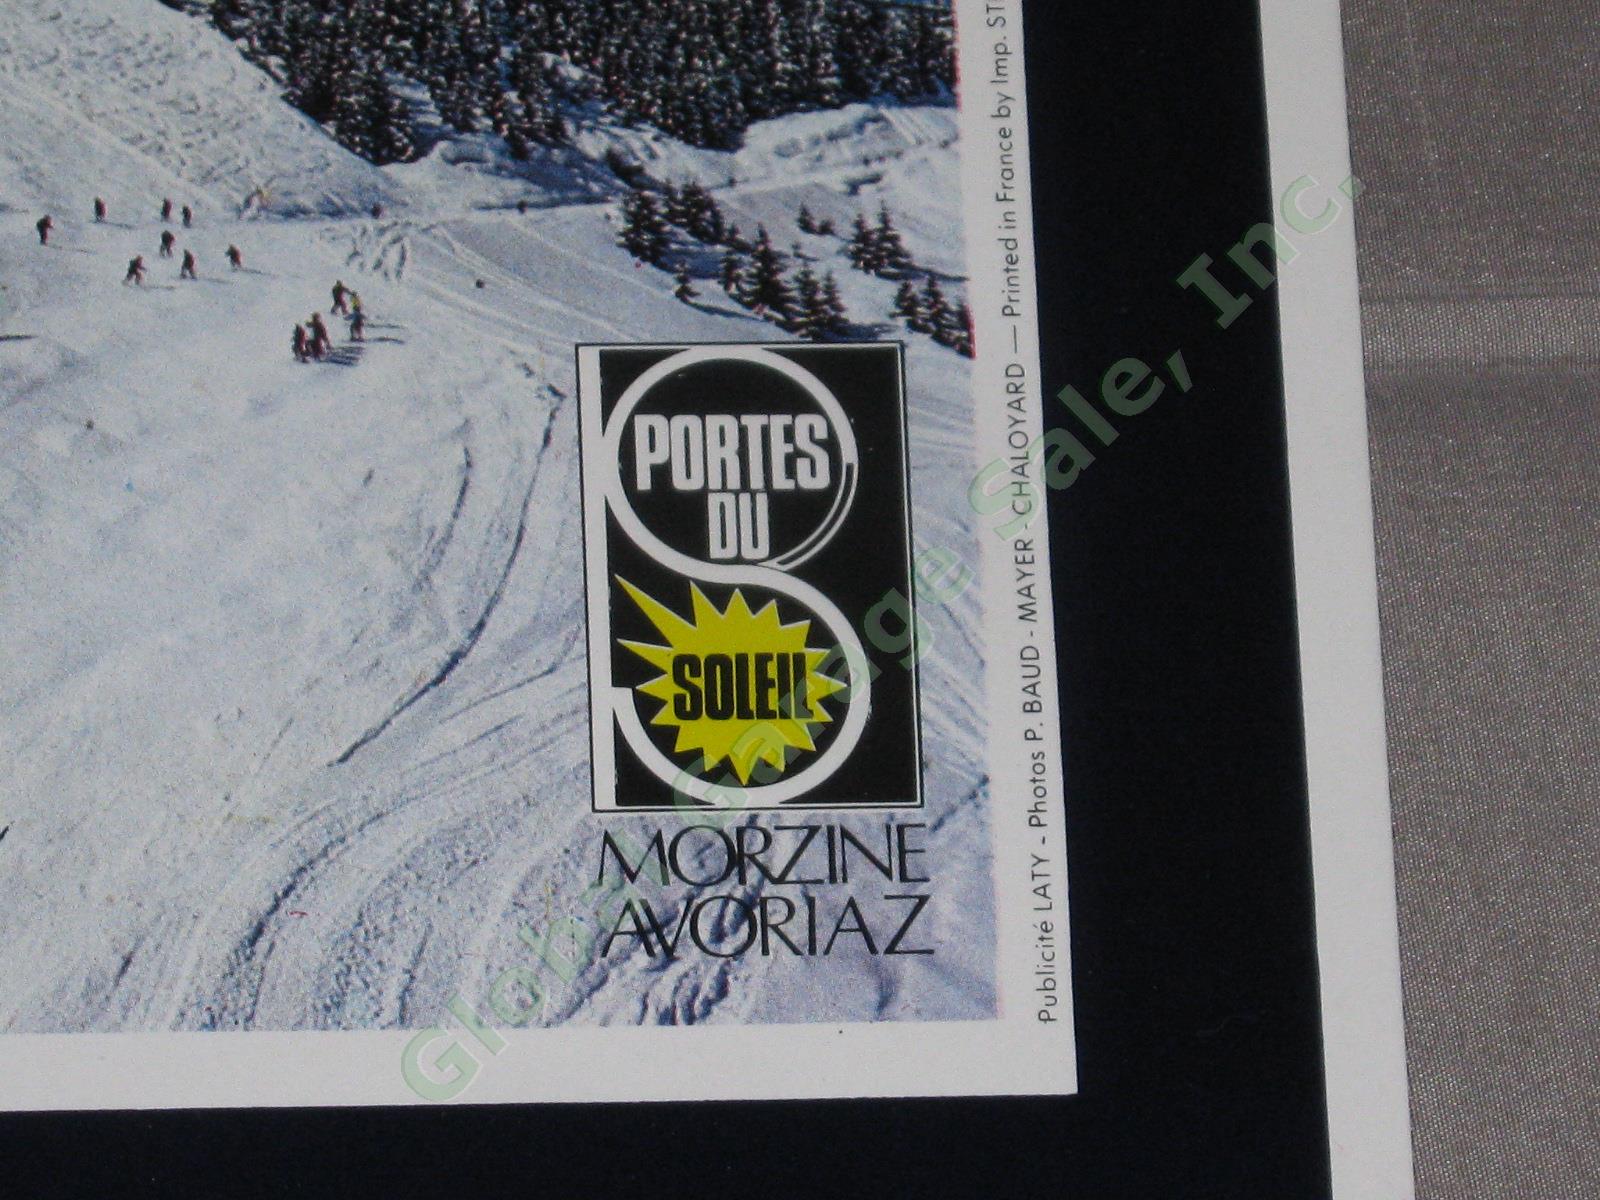 4 Vintage French Travel Ski Posters Morzine-Avoriaz Meribel Chamrousse La Brede 4